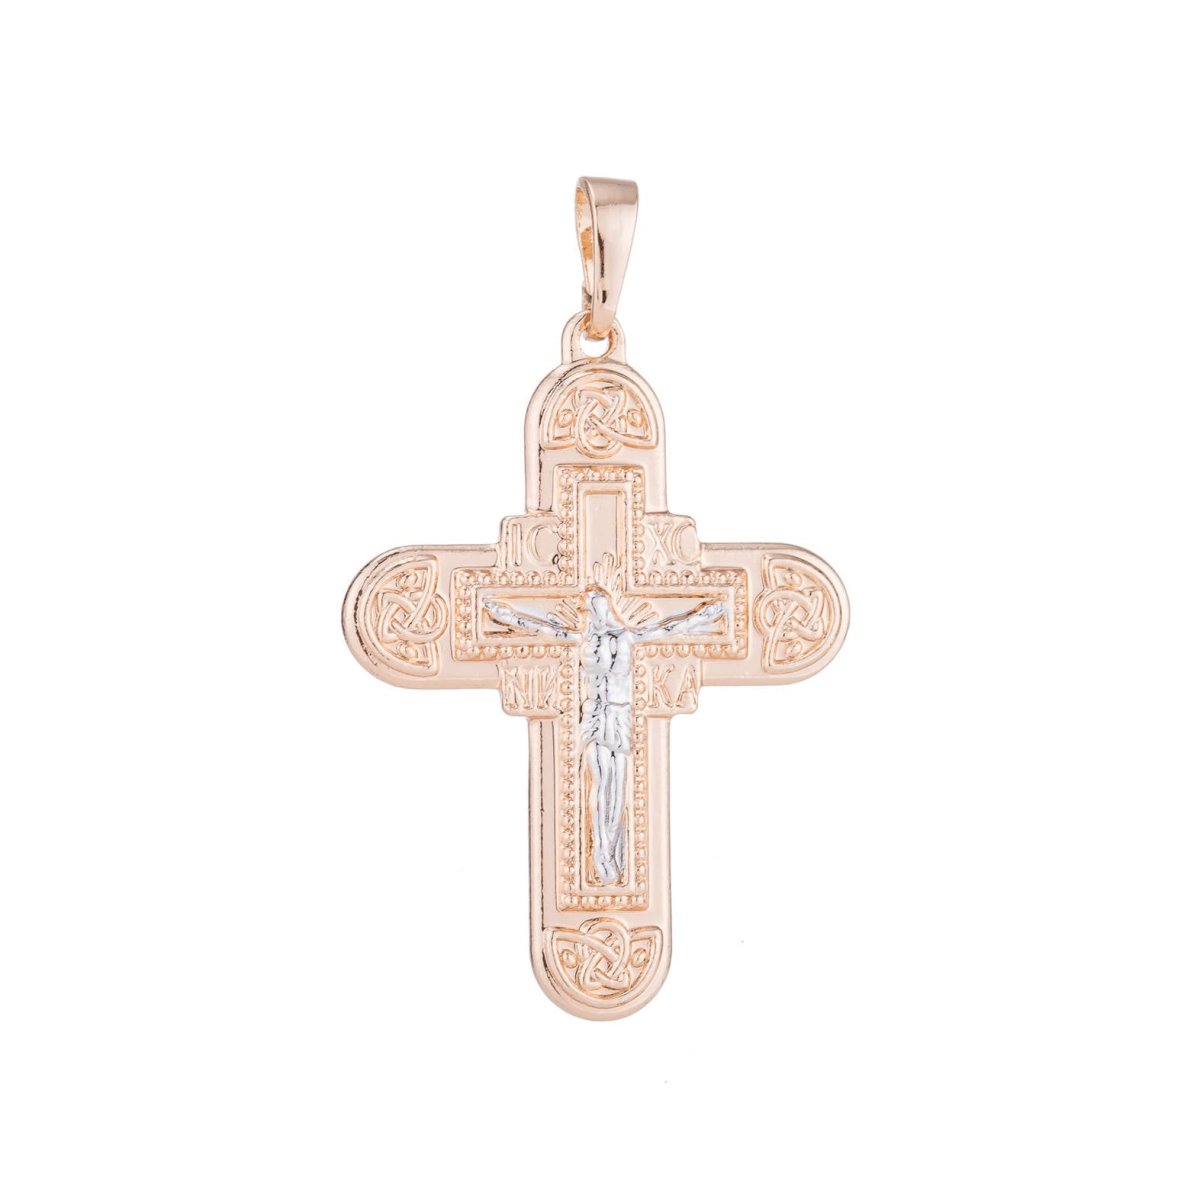 1 pc Jesus Christ Crucifix cross Pendant Gold Plated - Vintage Cross Gold Plated Pendant Rose Gold Plated Pendant for Jewelry Making Supply CL-107 - DLUXCA